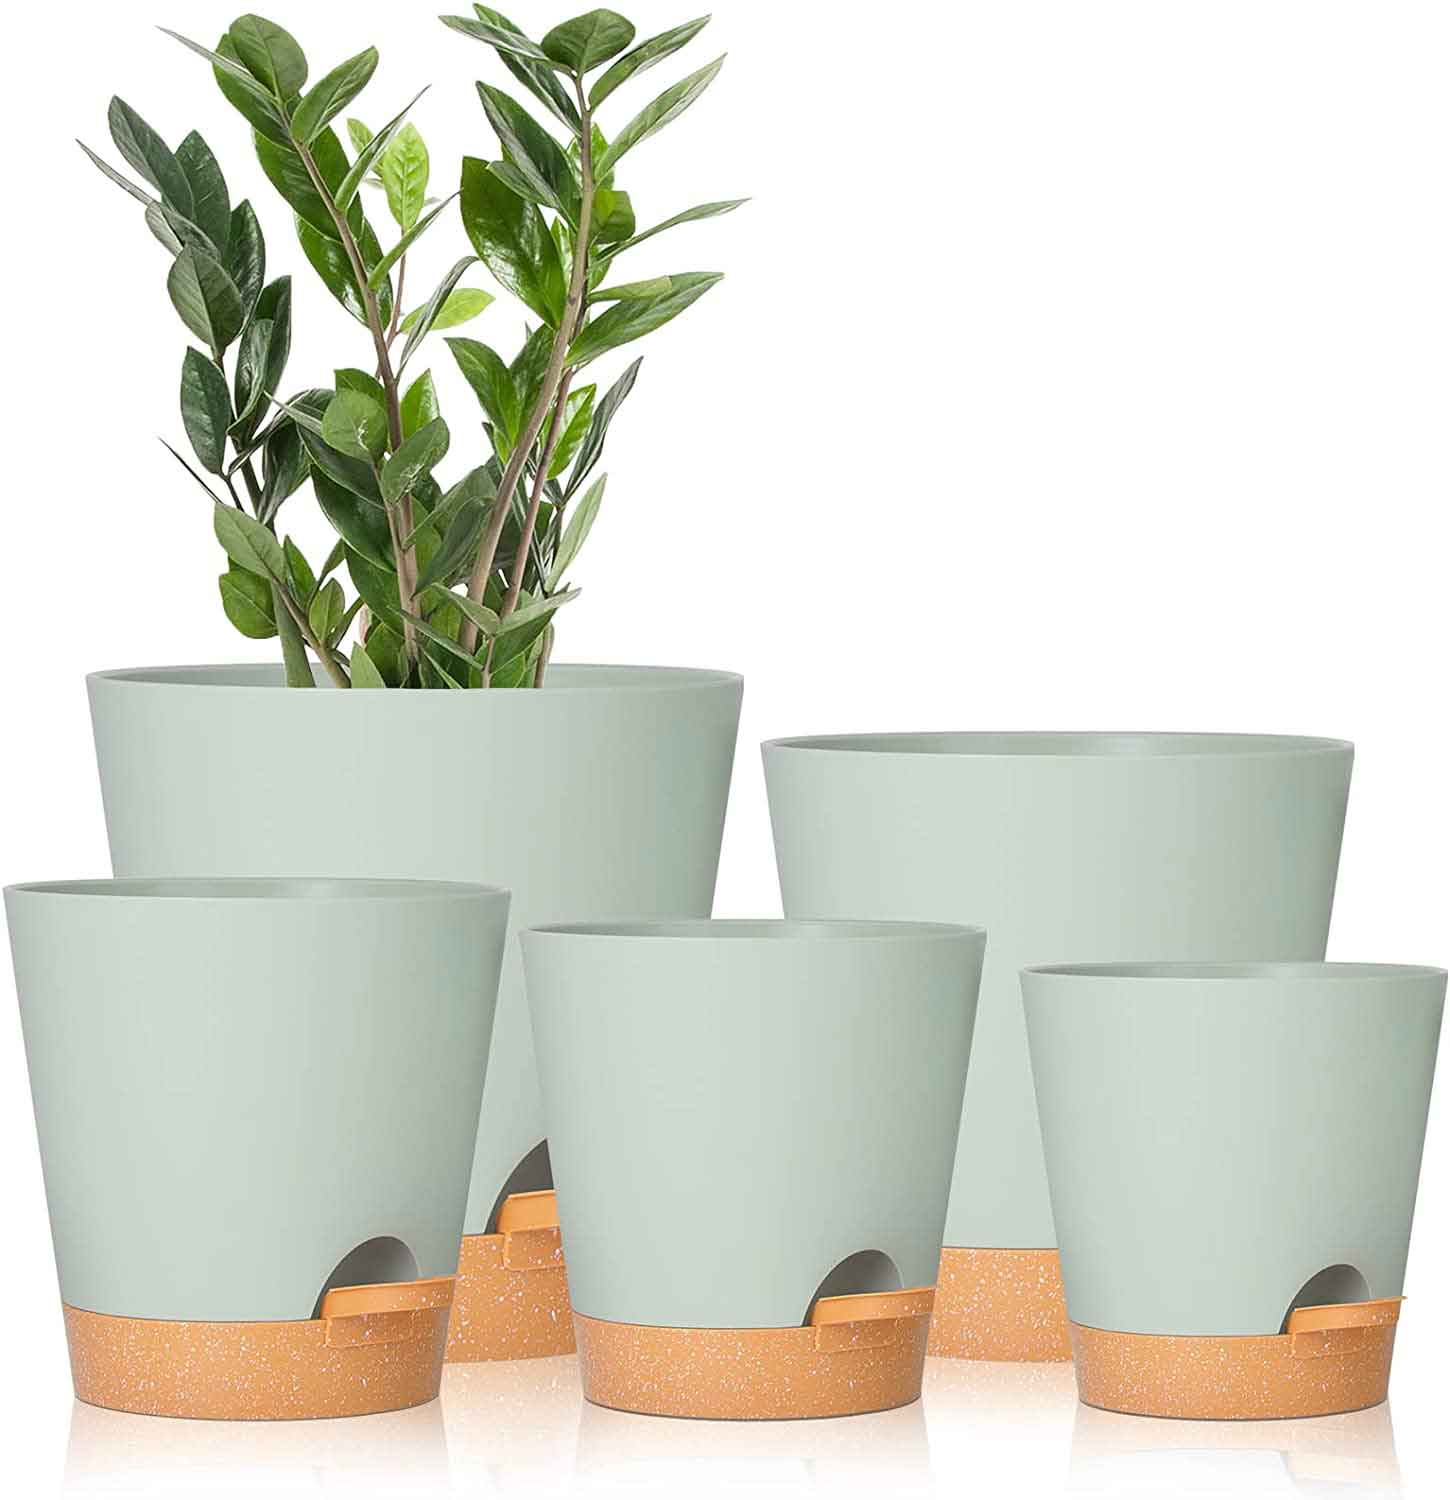 Set of Five Self-Watering Planter Pots